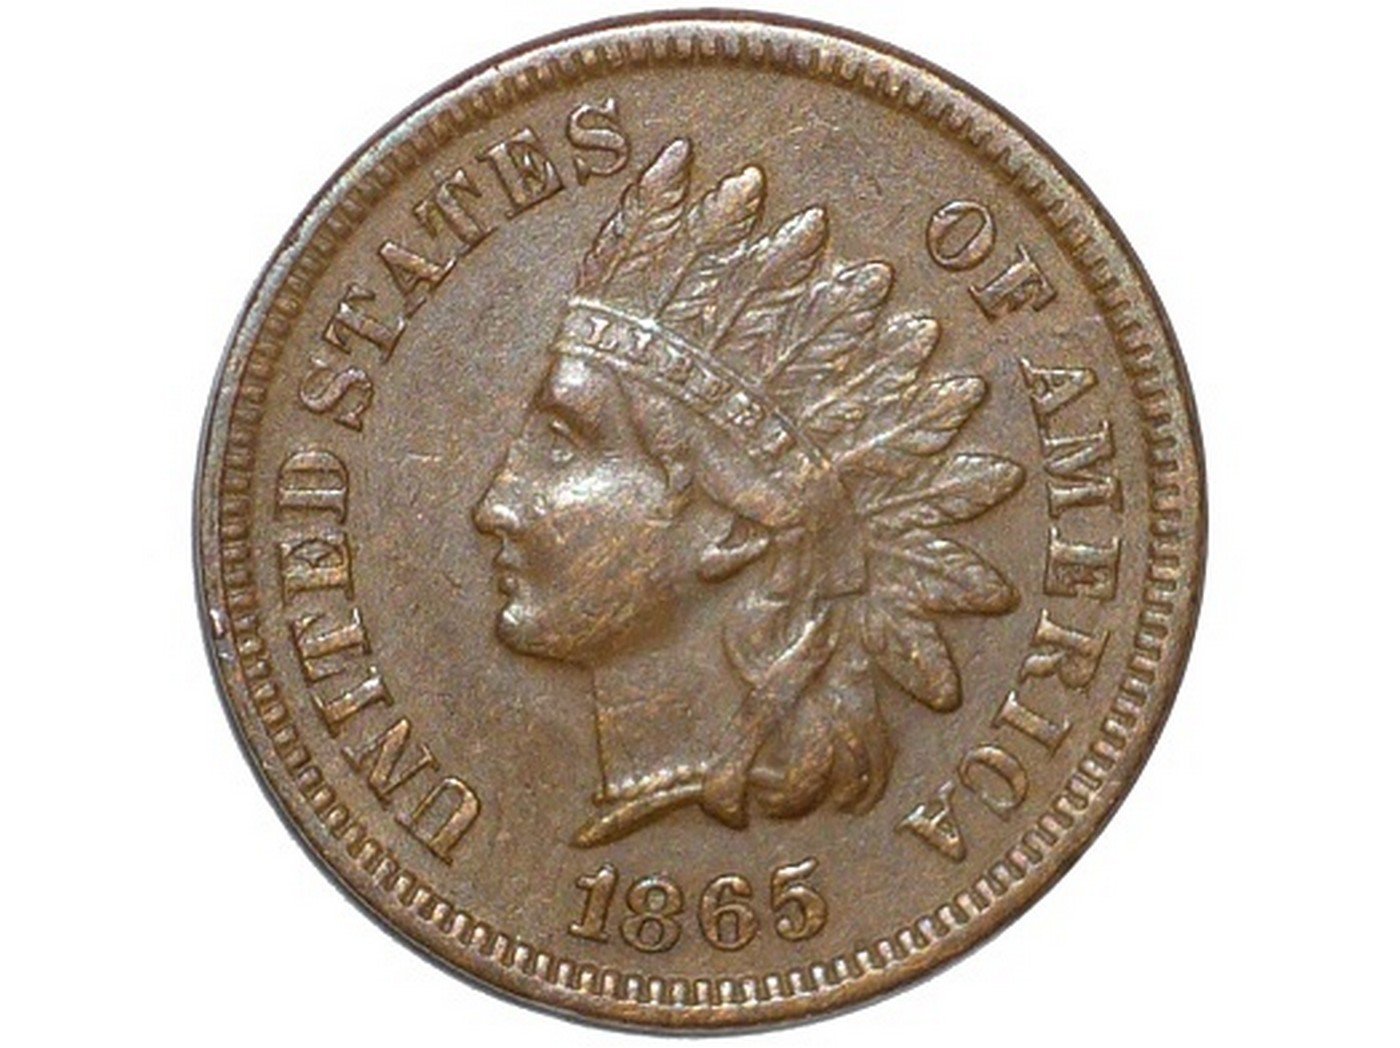 1865 Plain 5 RPD-004 - Indian Head Penny - Photo by David Poliquin